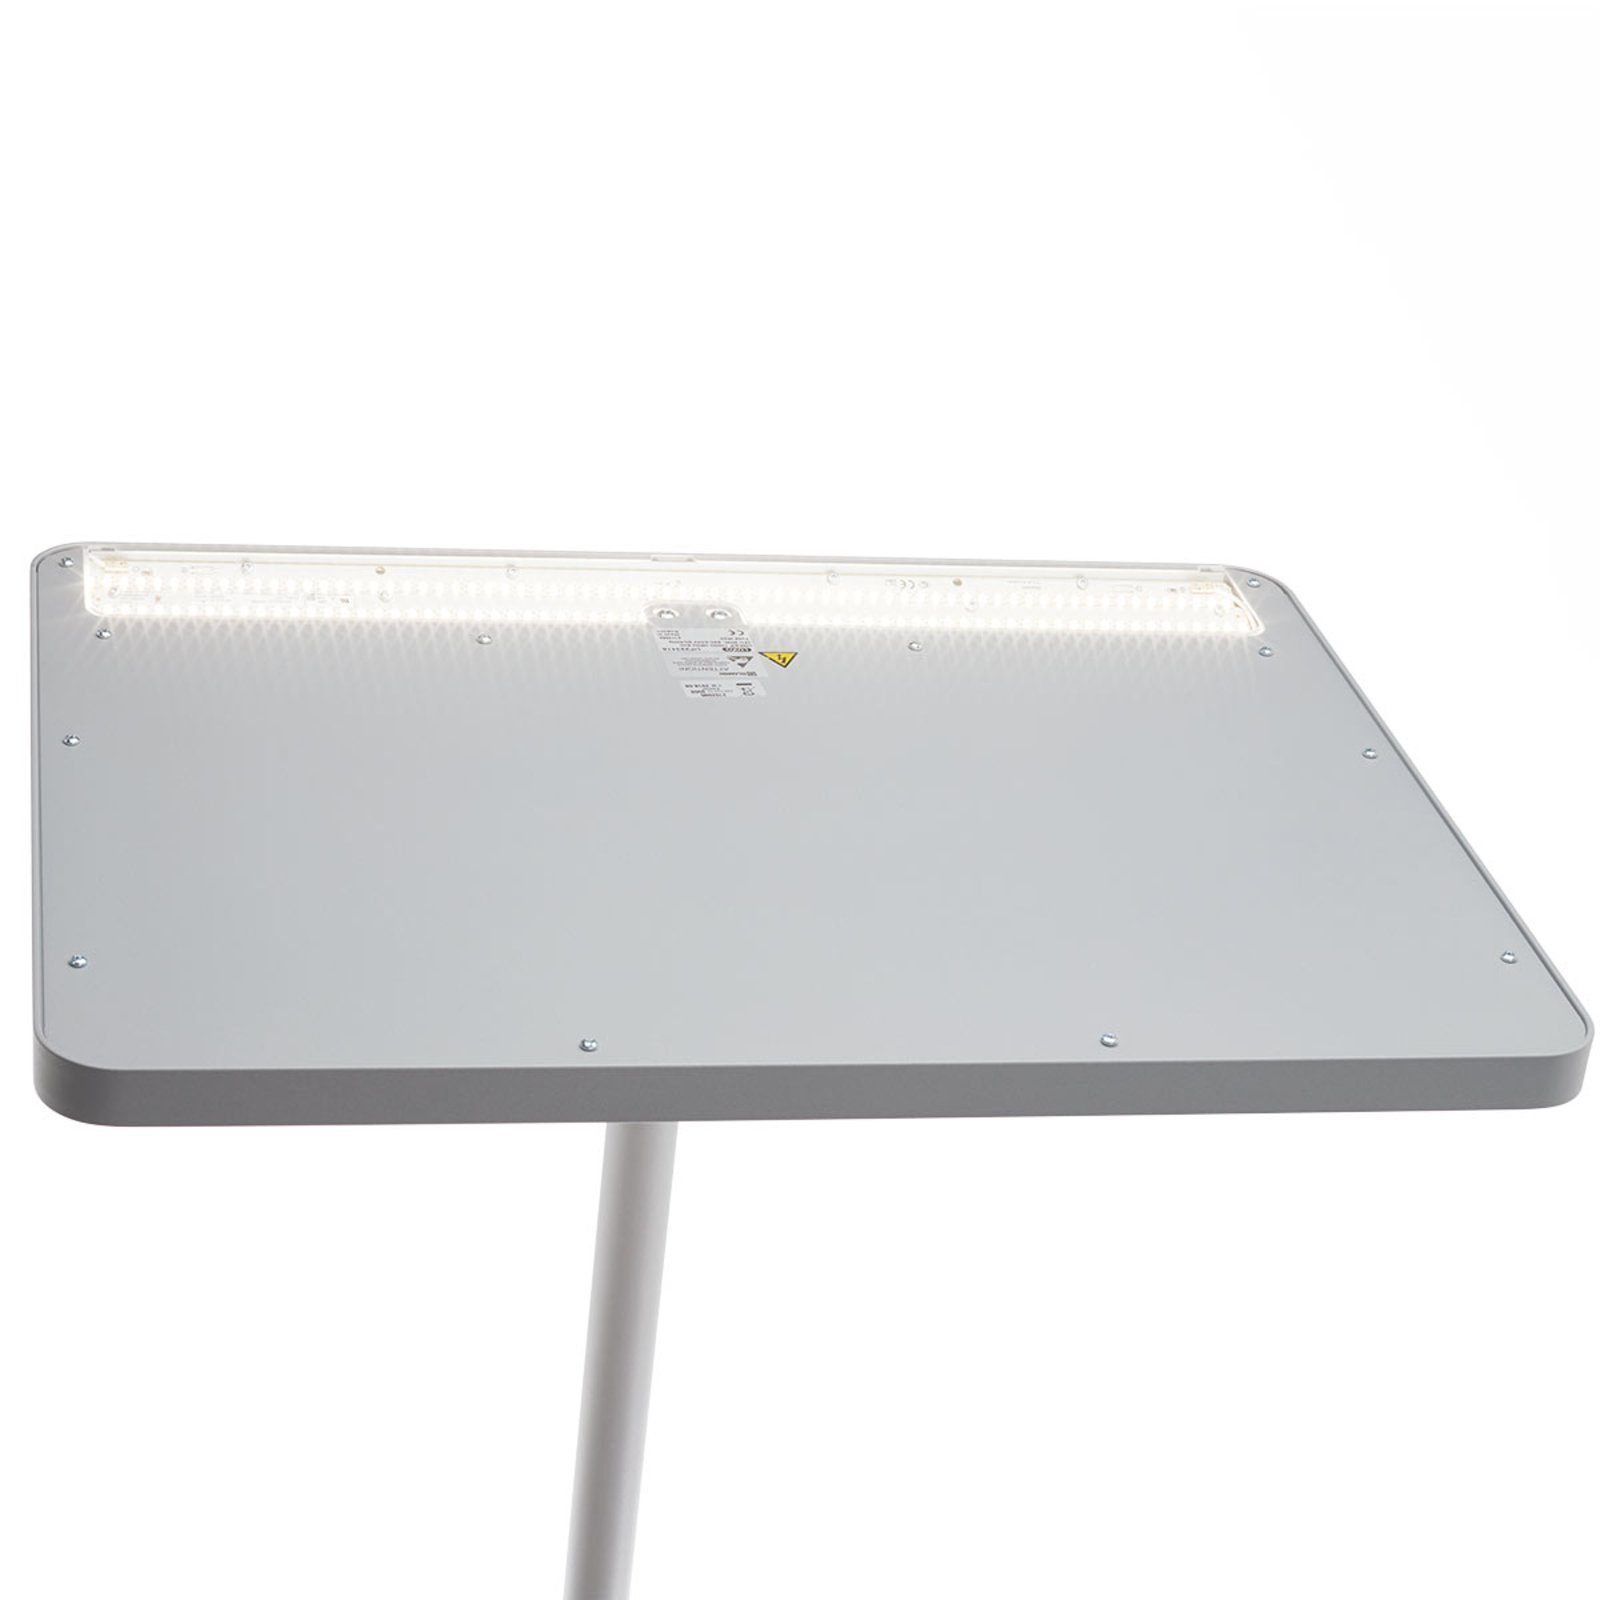 Office floor lamp Linea-F with sensor, grey